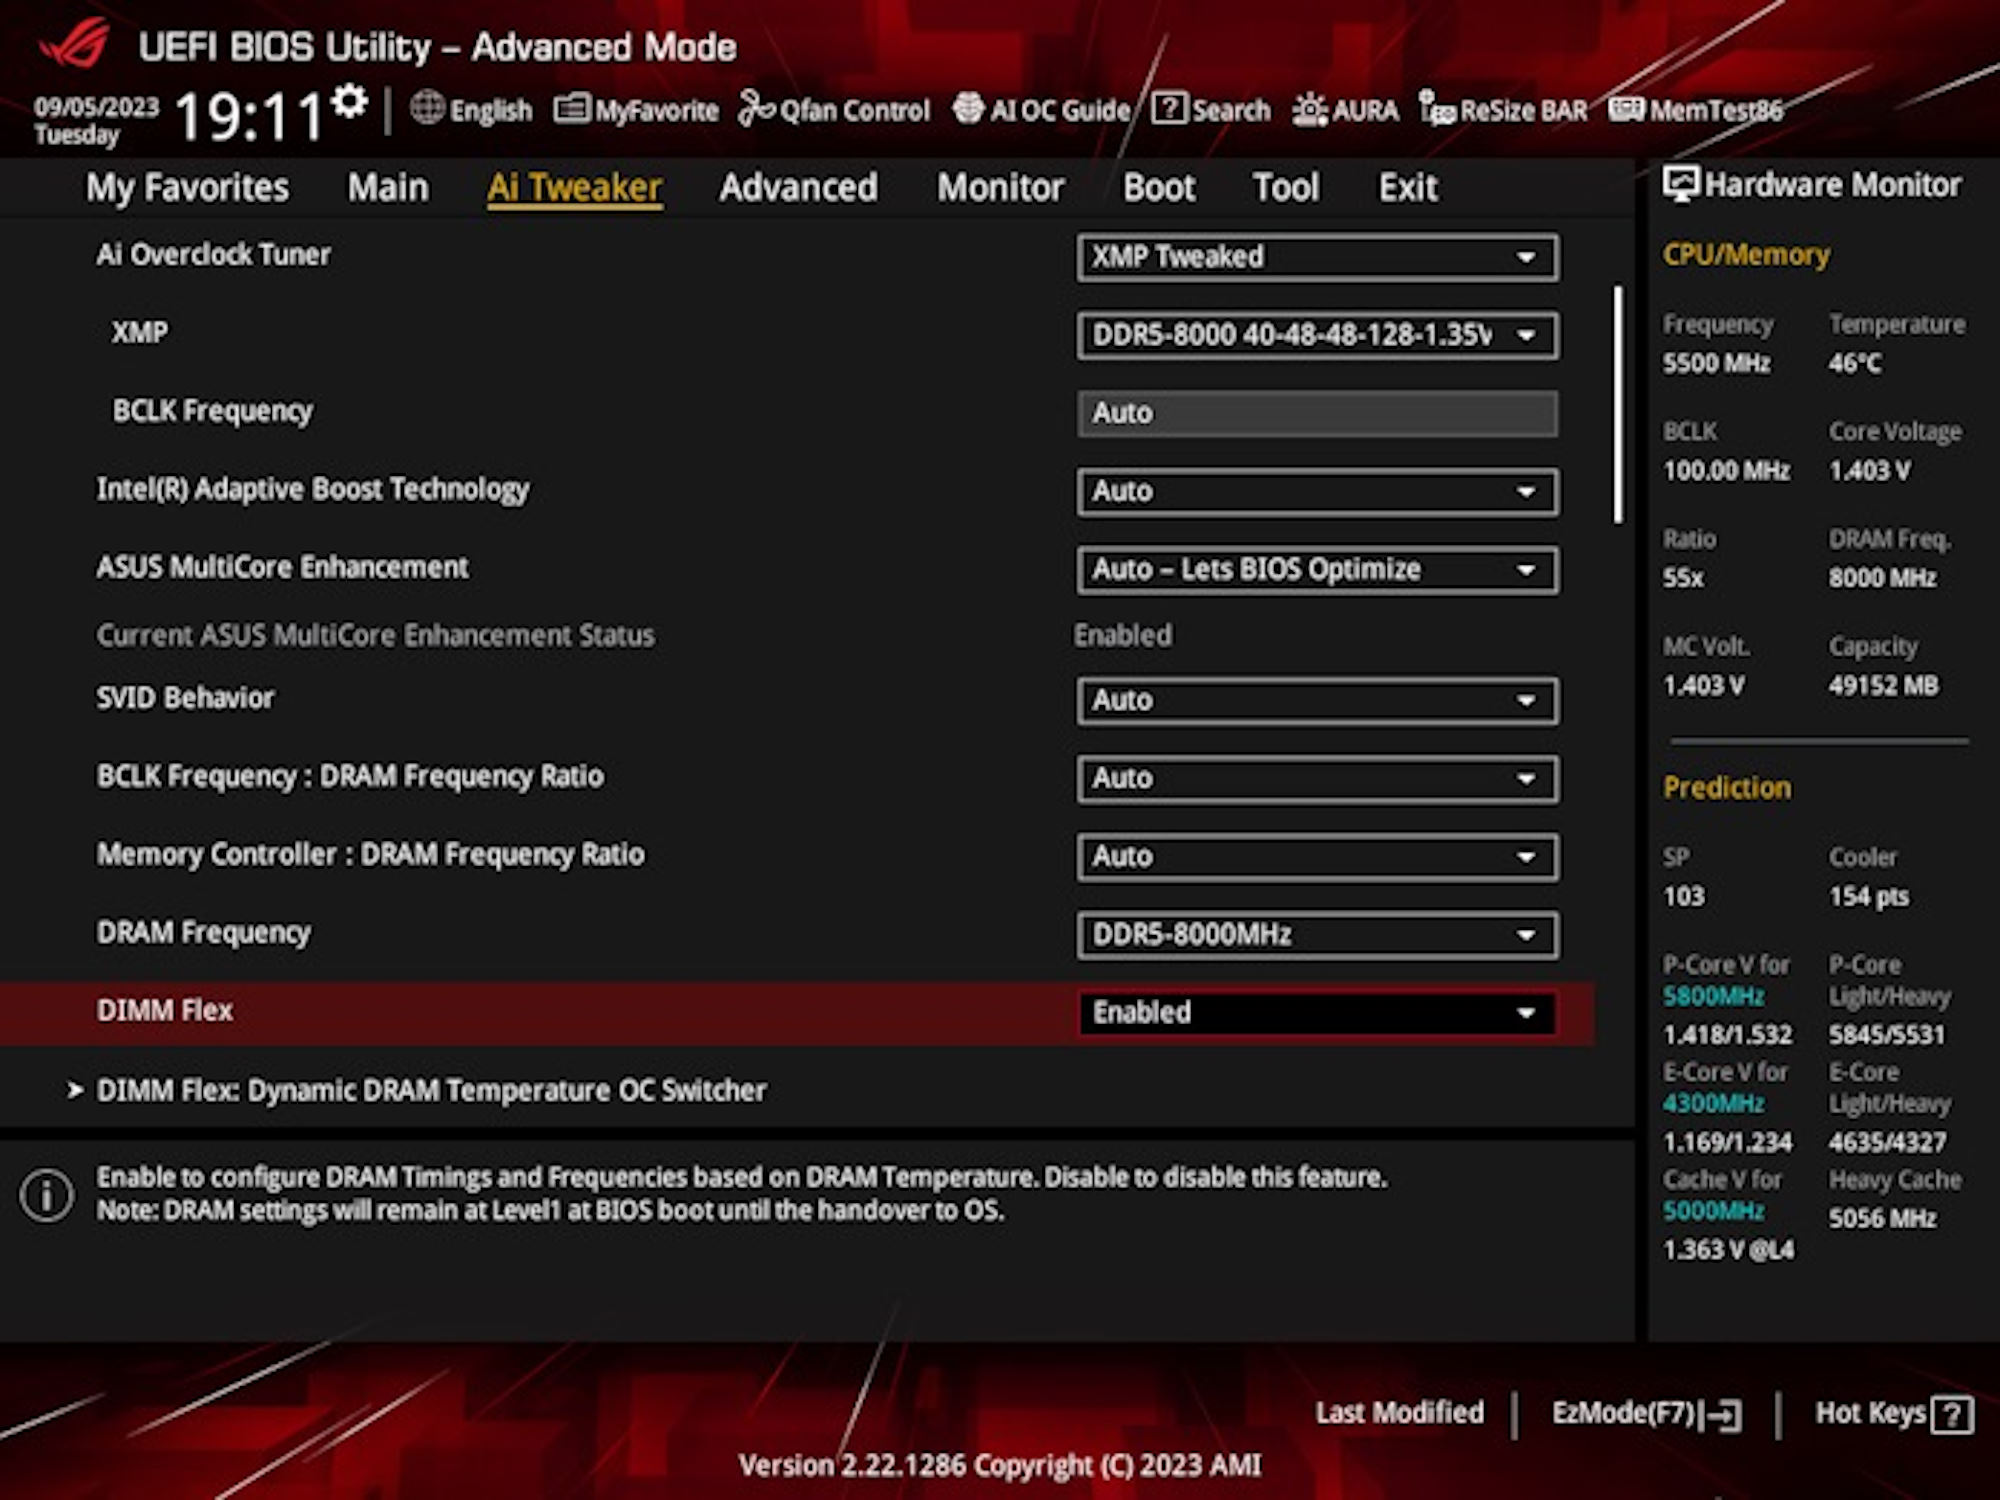 A screenshot of the UEFI BIOS showing where to enable DIMM Flex in the AI Tweaker menu